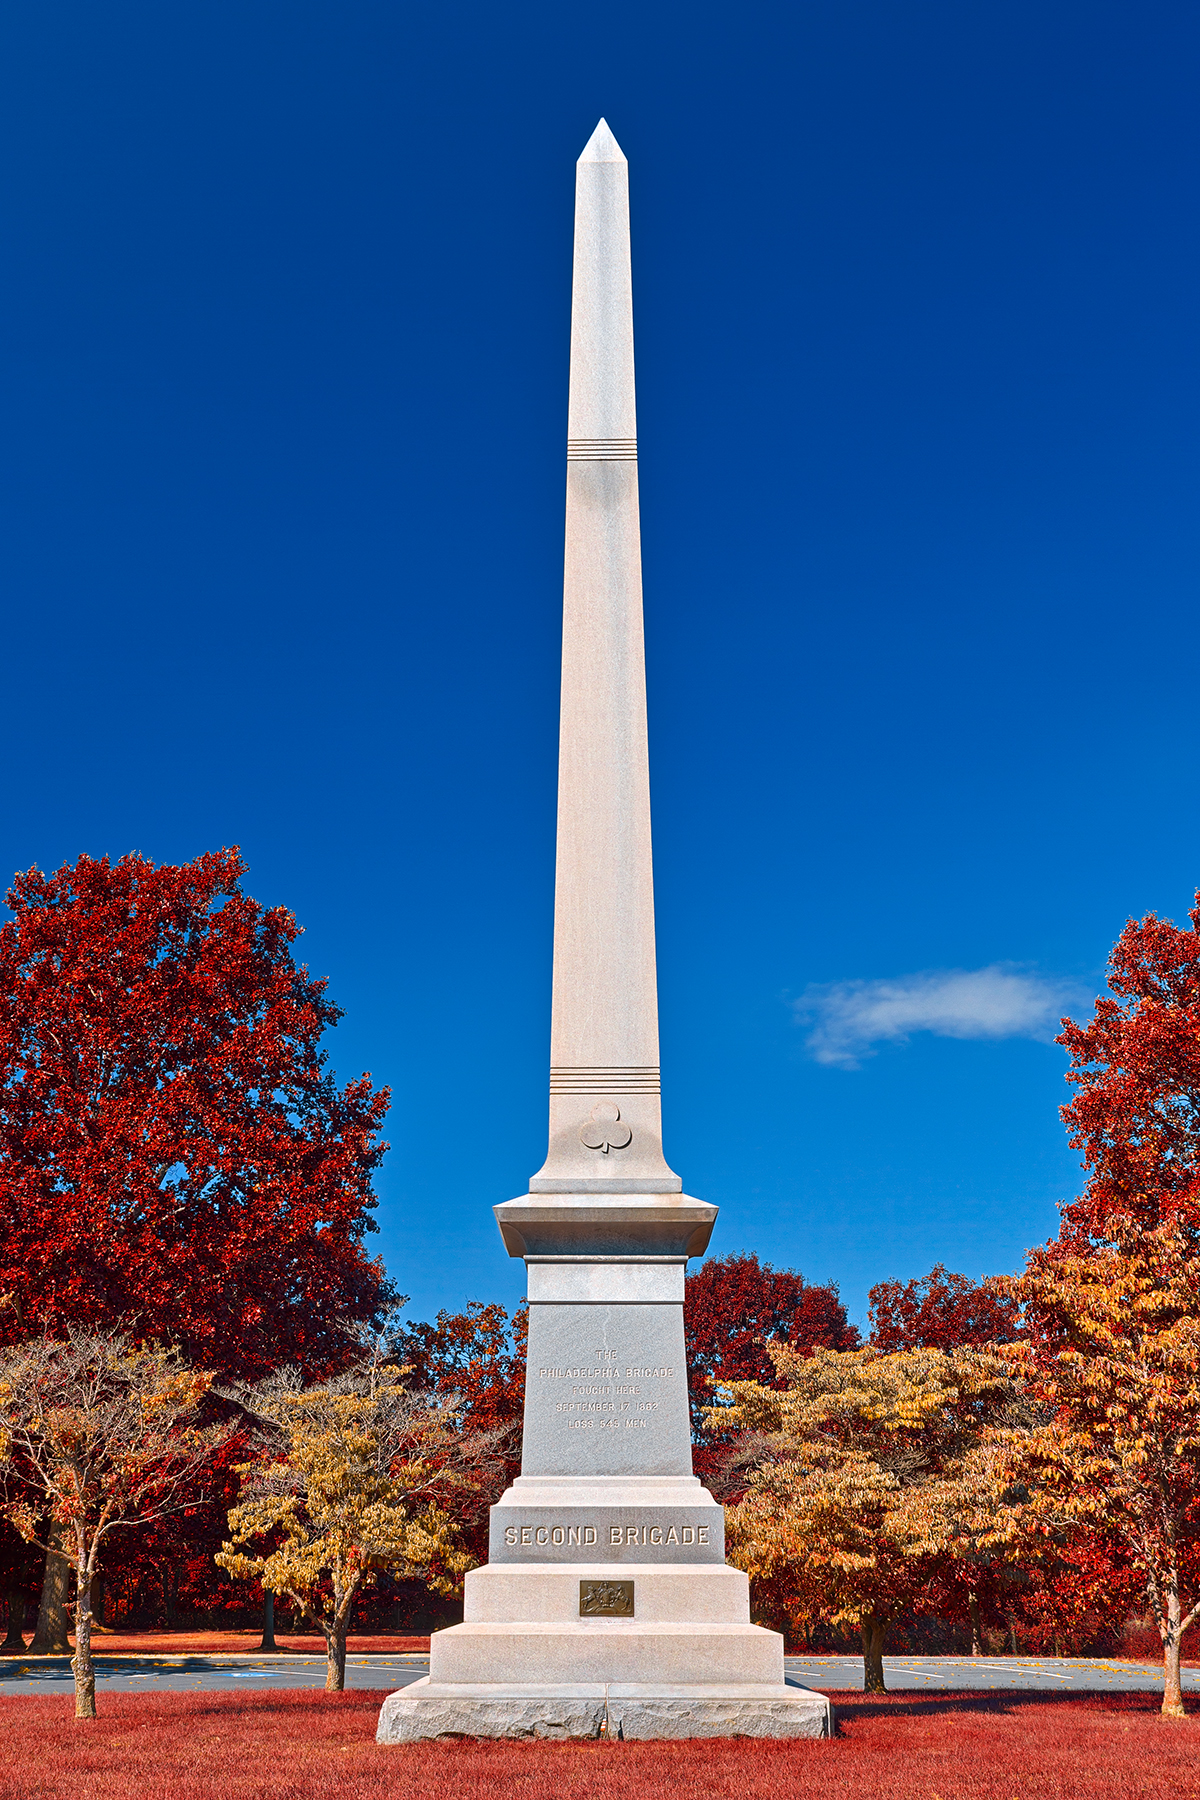 Philadelphia second brigade monument - autumn warm hdr photo